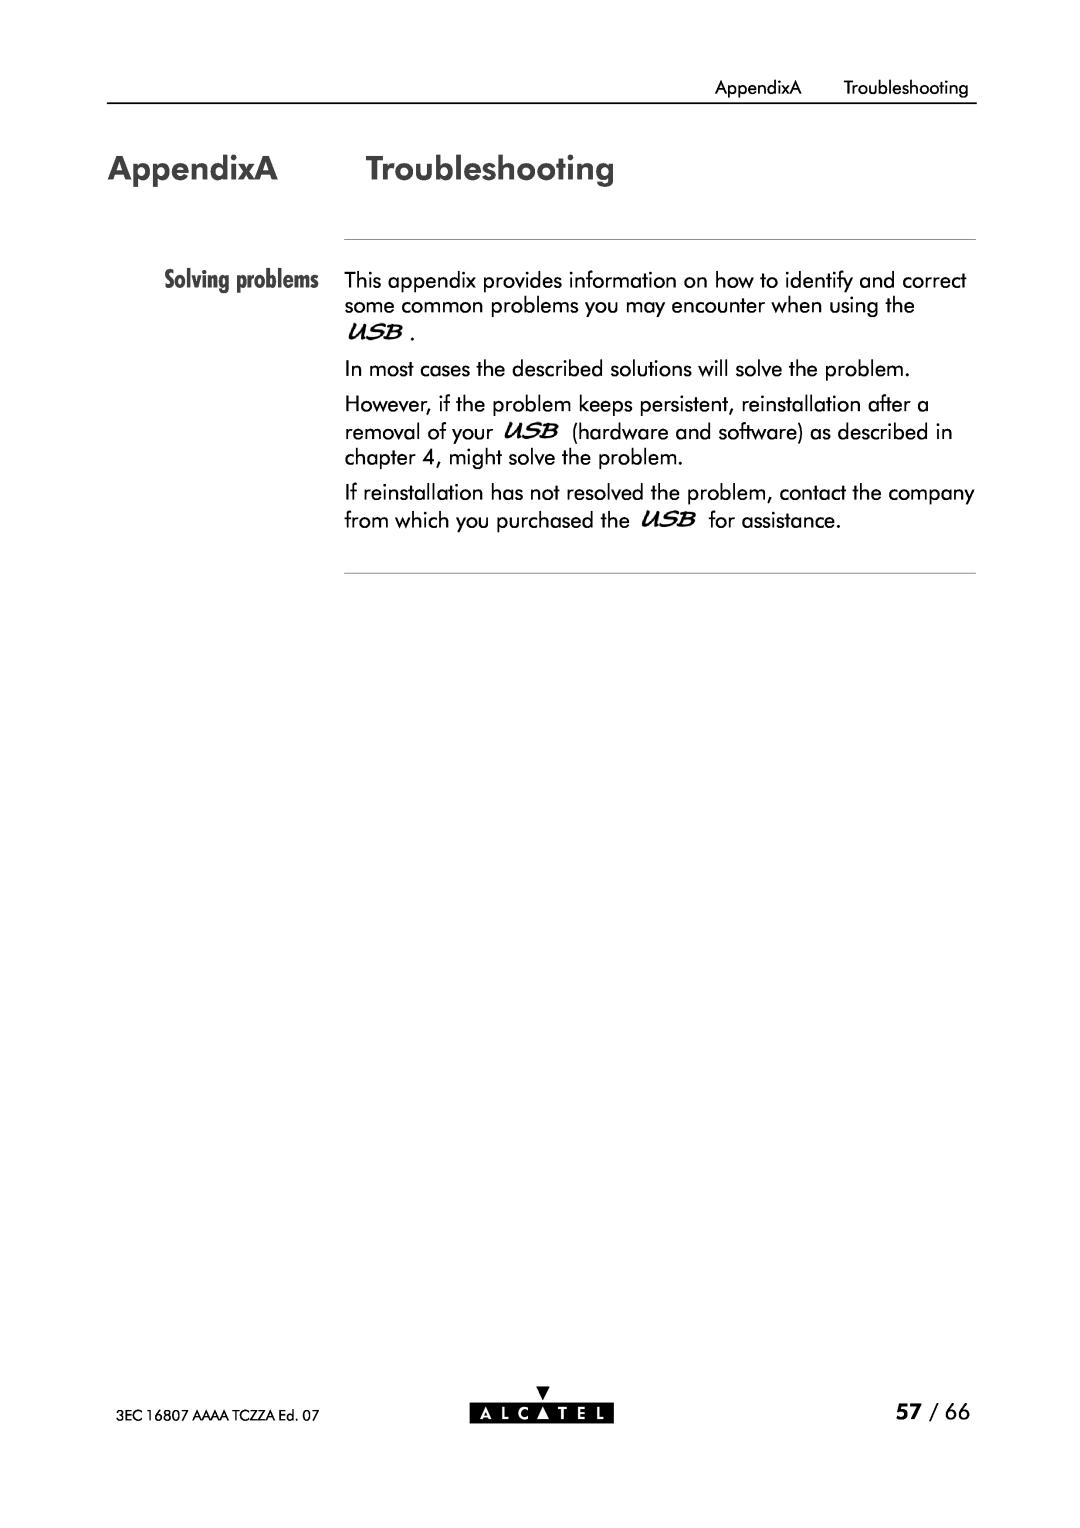 Alcatel Carrier Internetworking Solutions 3EC 16807 AAAA TCZZA ED. 07 manual AppendixA Troubleshooting 